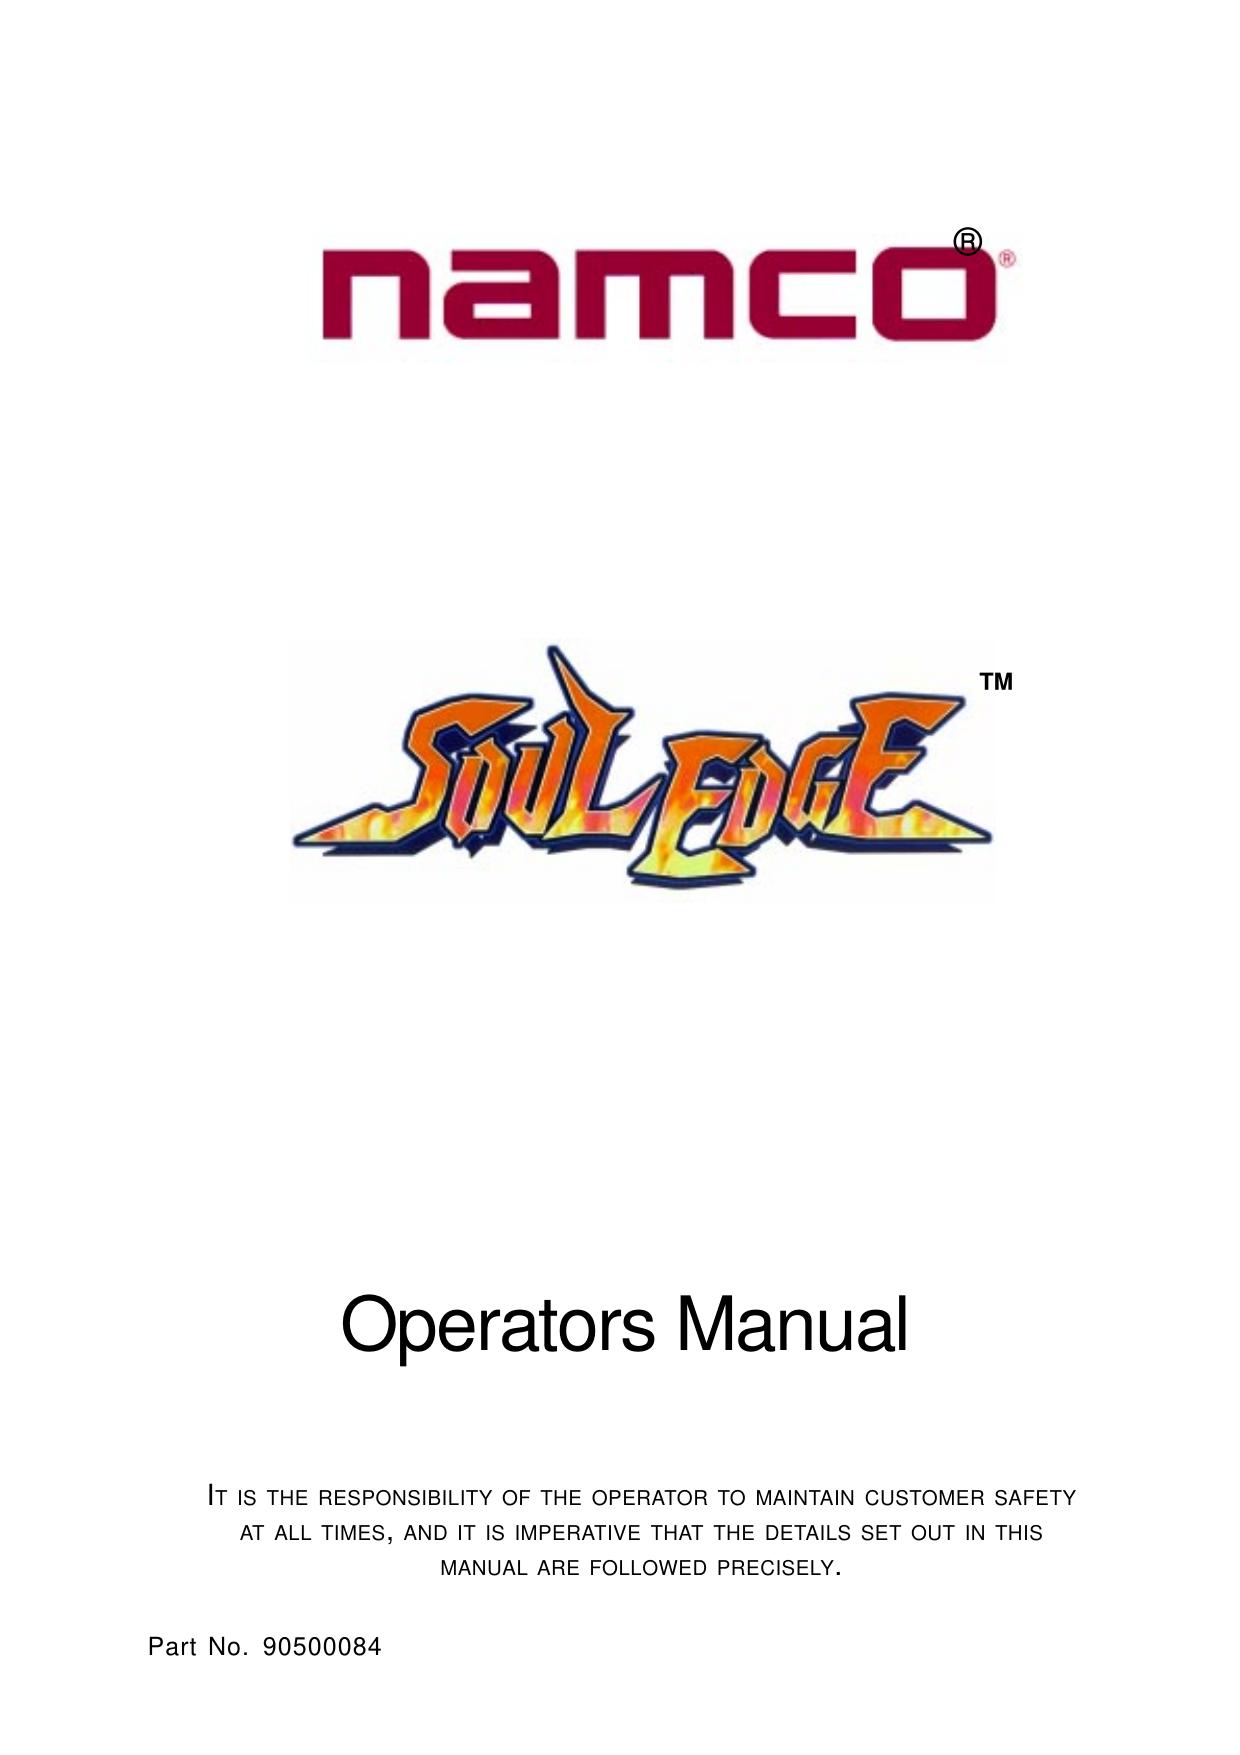 Operators Manaual